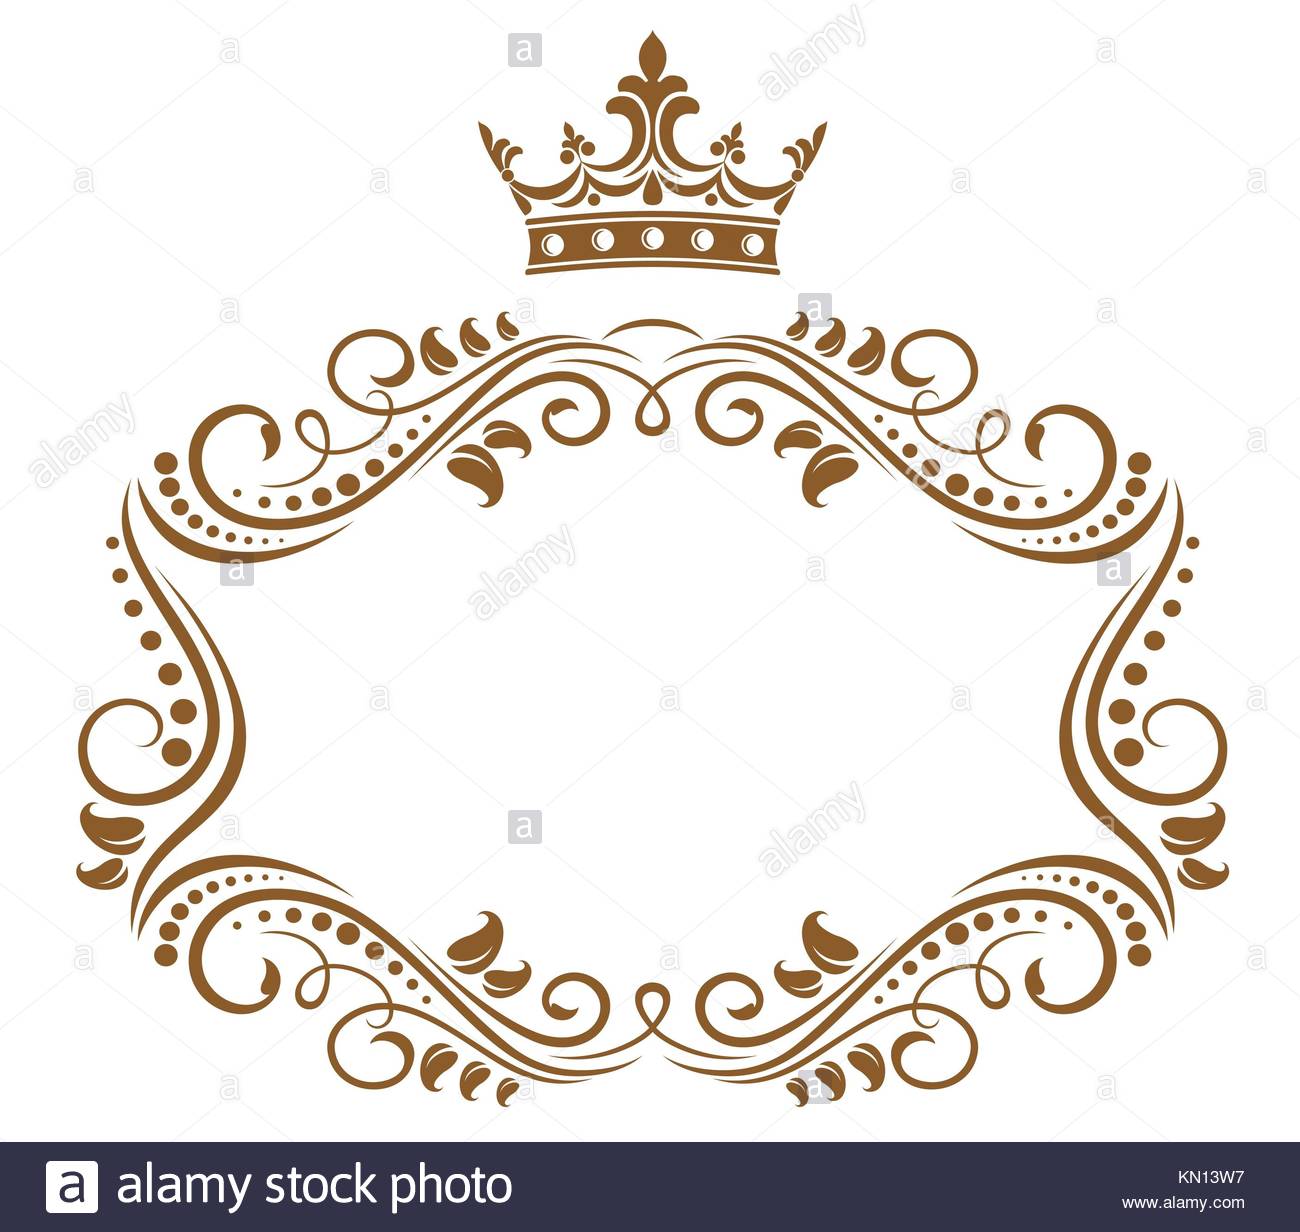 Royal Crown Emblem Stock Photos & Royal Crown Emblem Stock ...